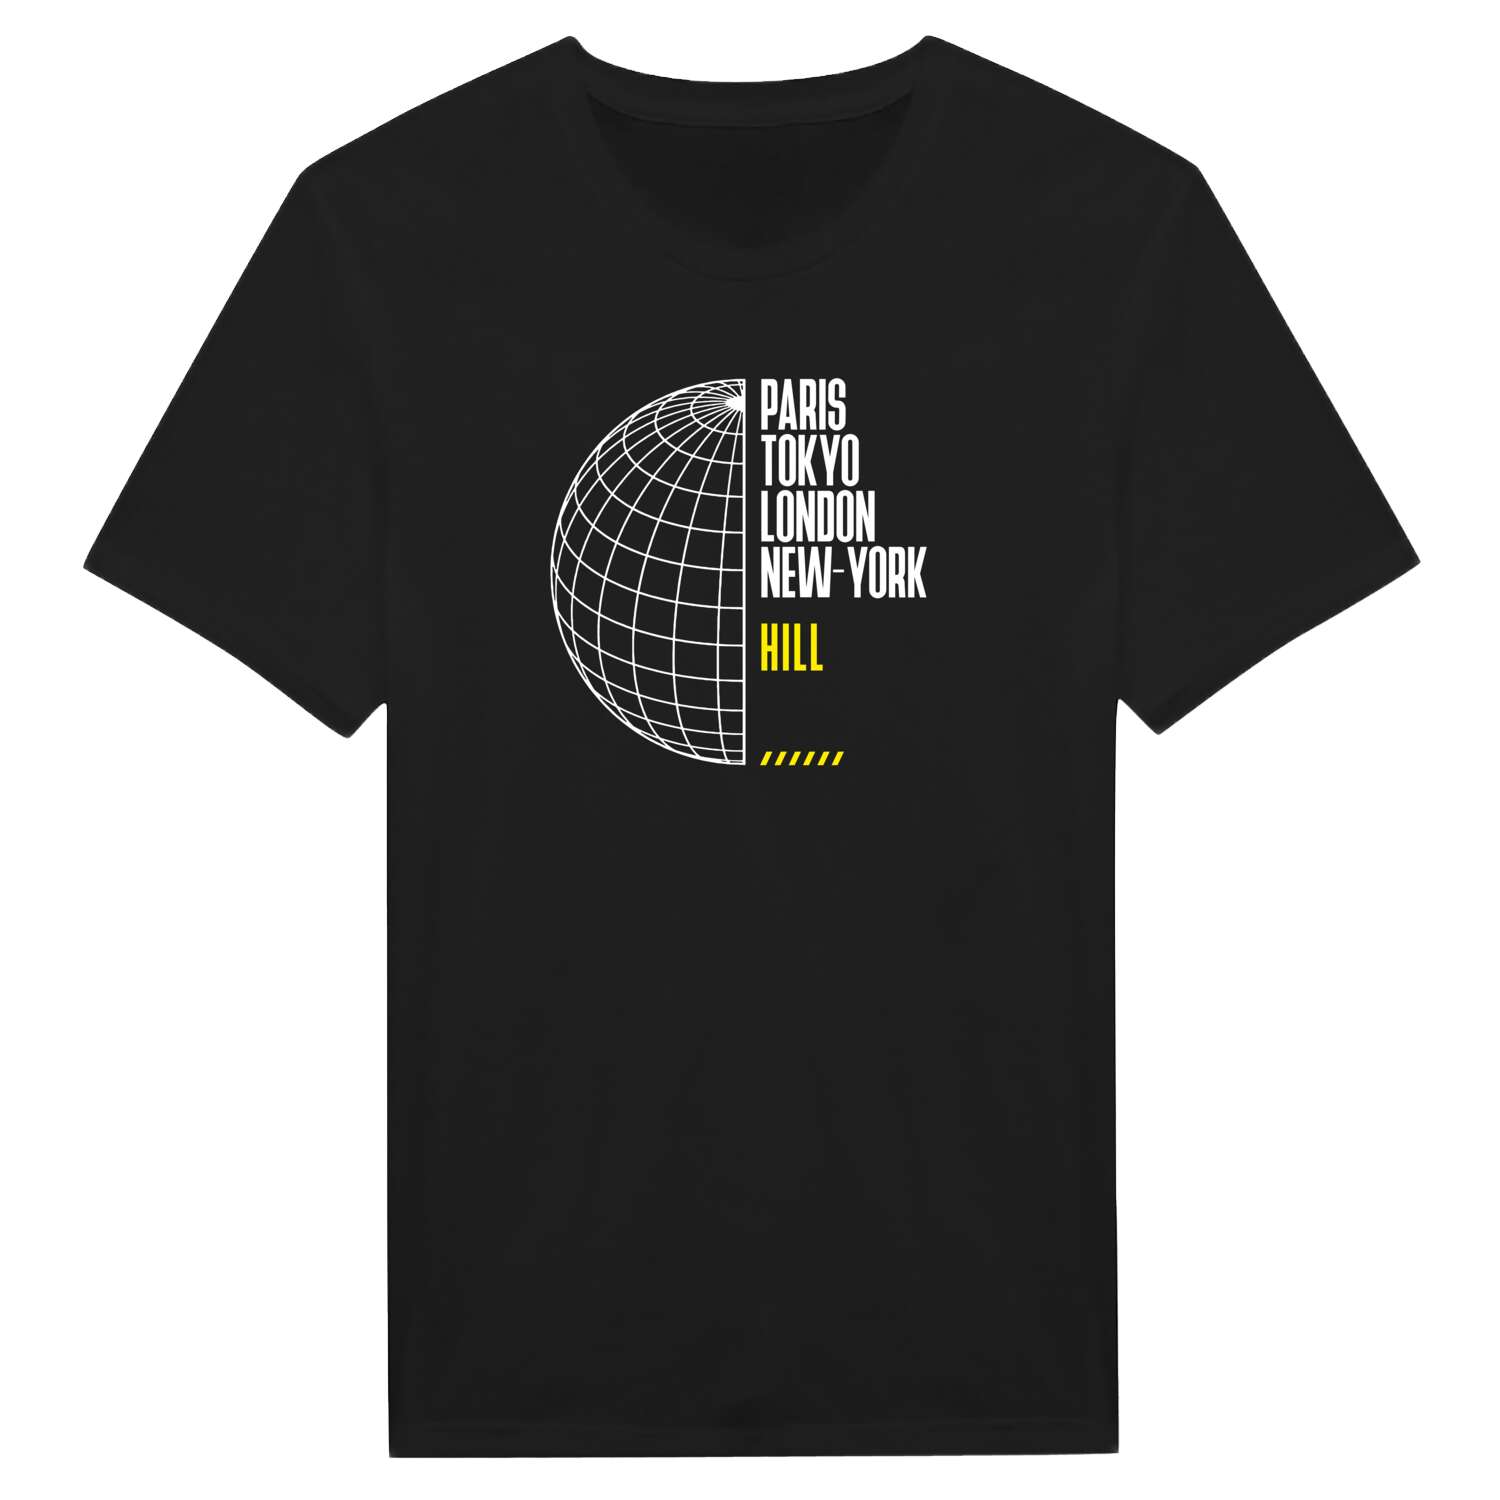 Hill T-Shirt »Paris Tokyo London«